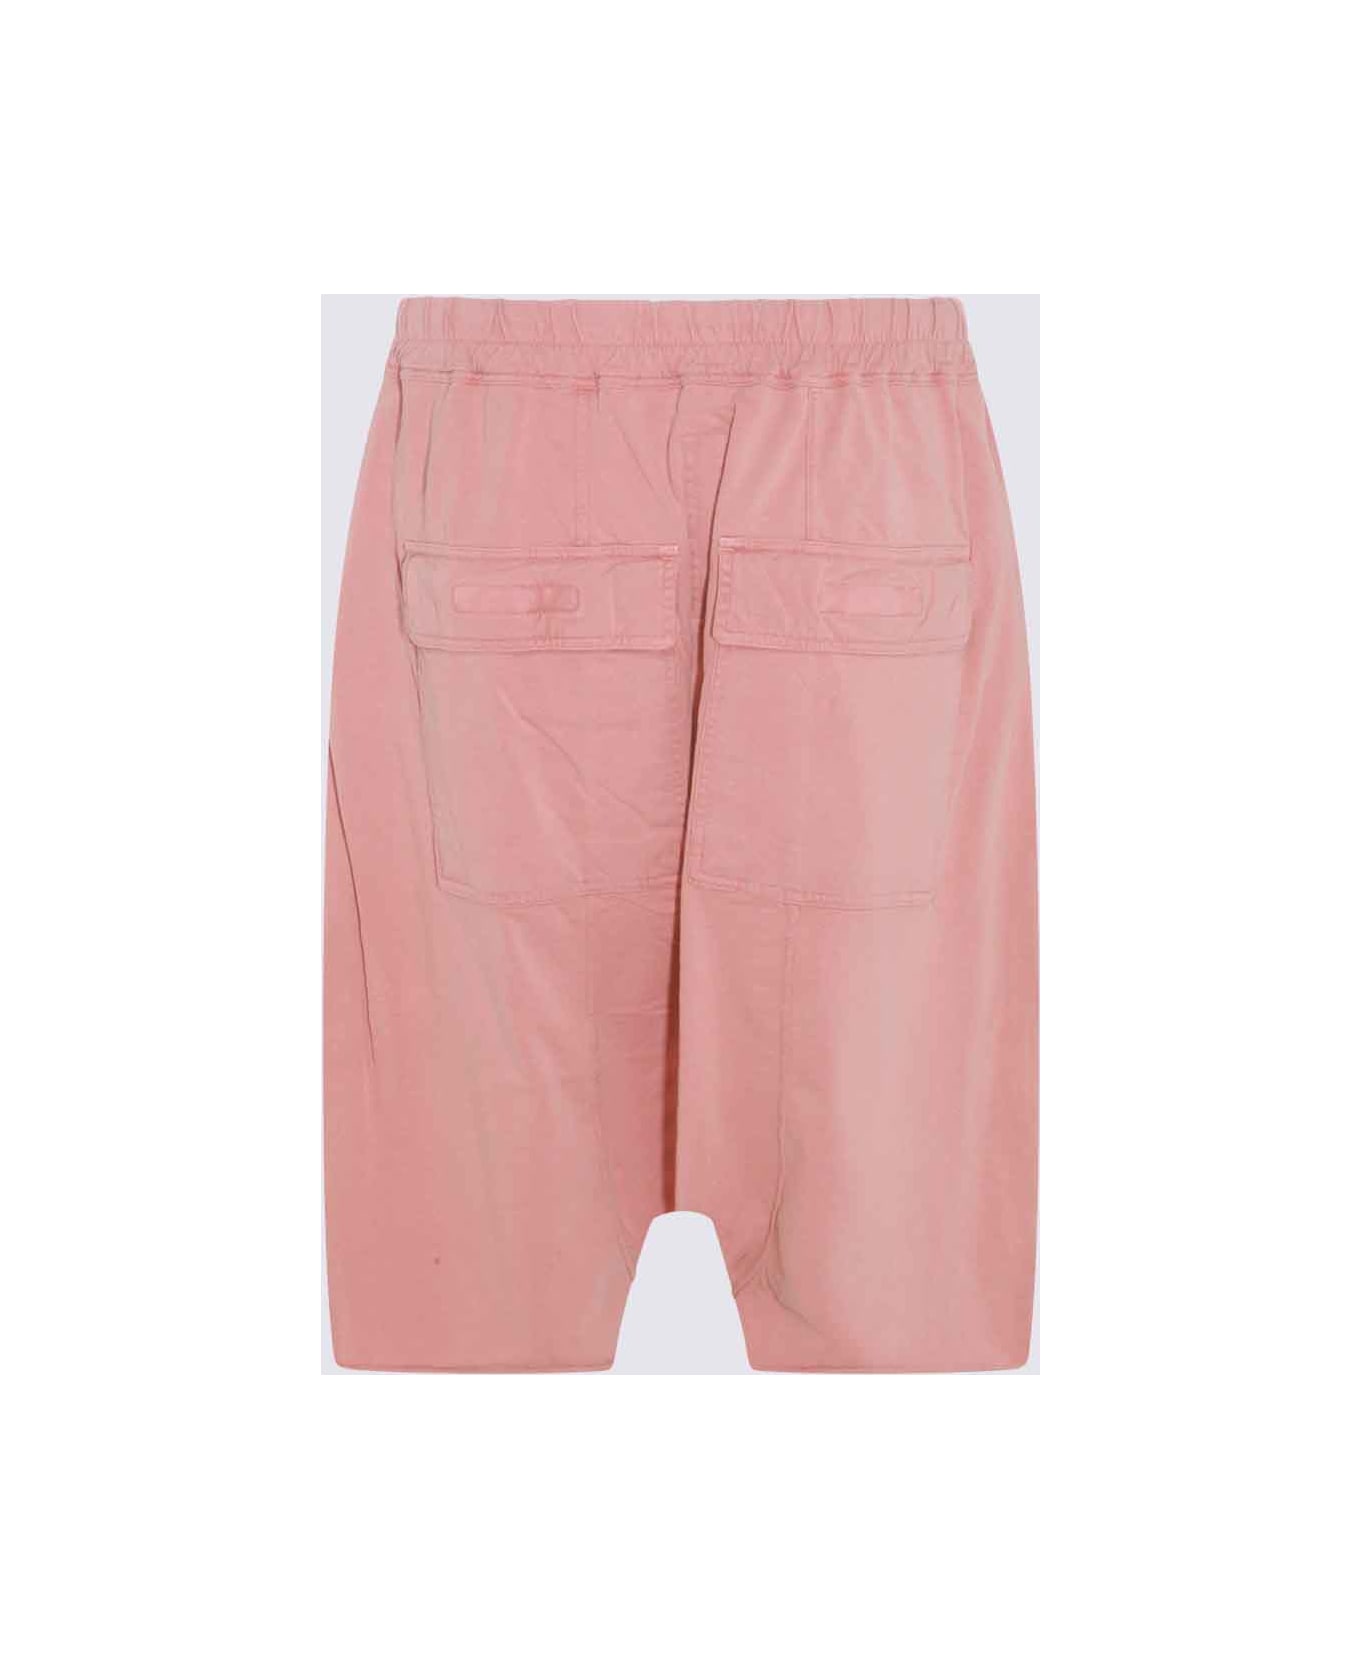 DRKSHDW Pink Cotton Shorts - Pink